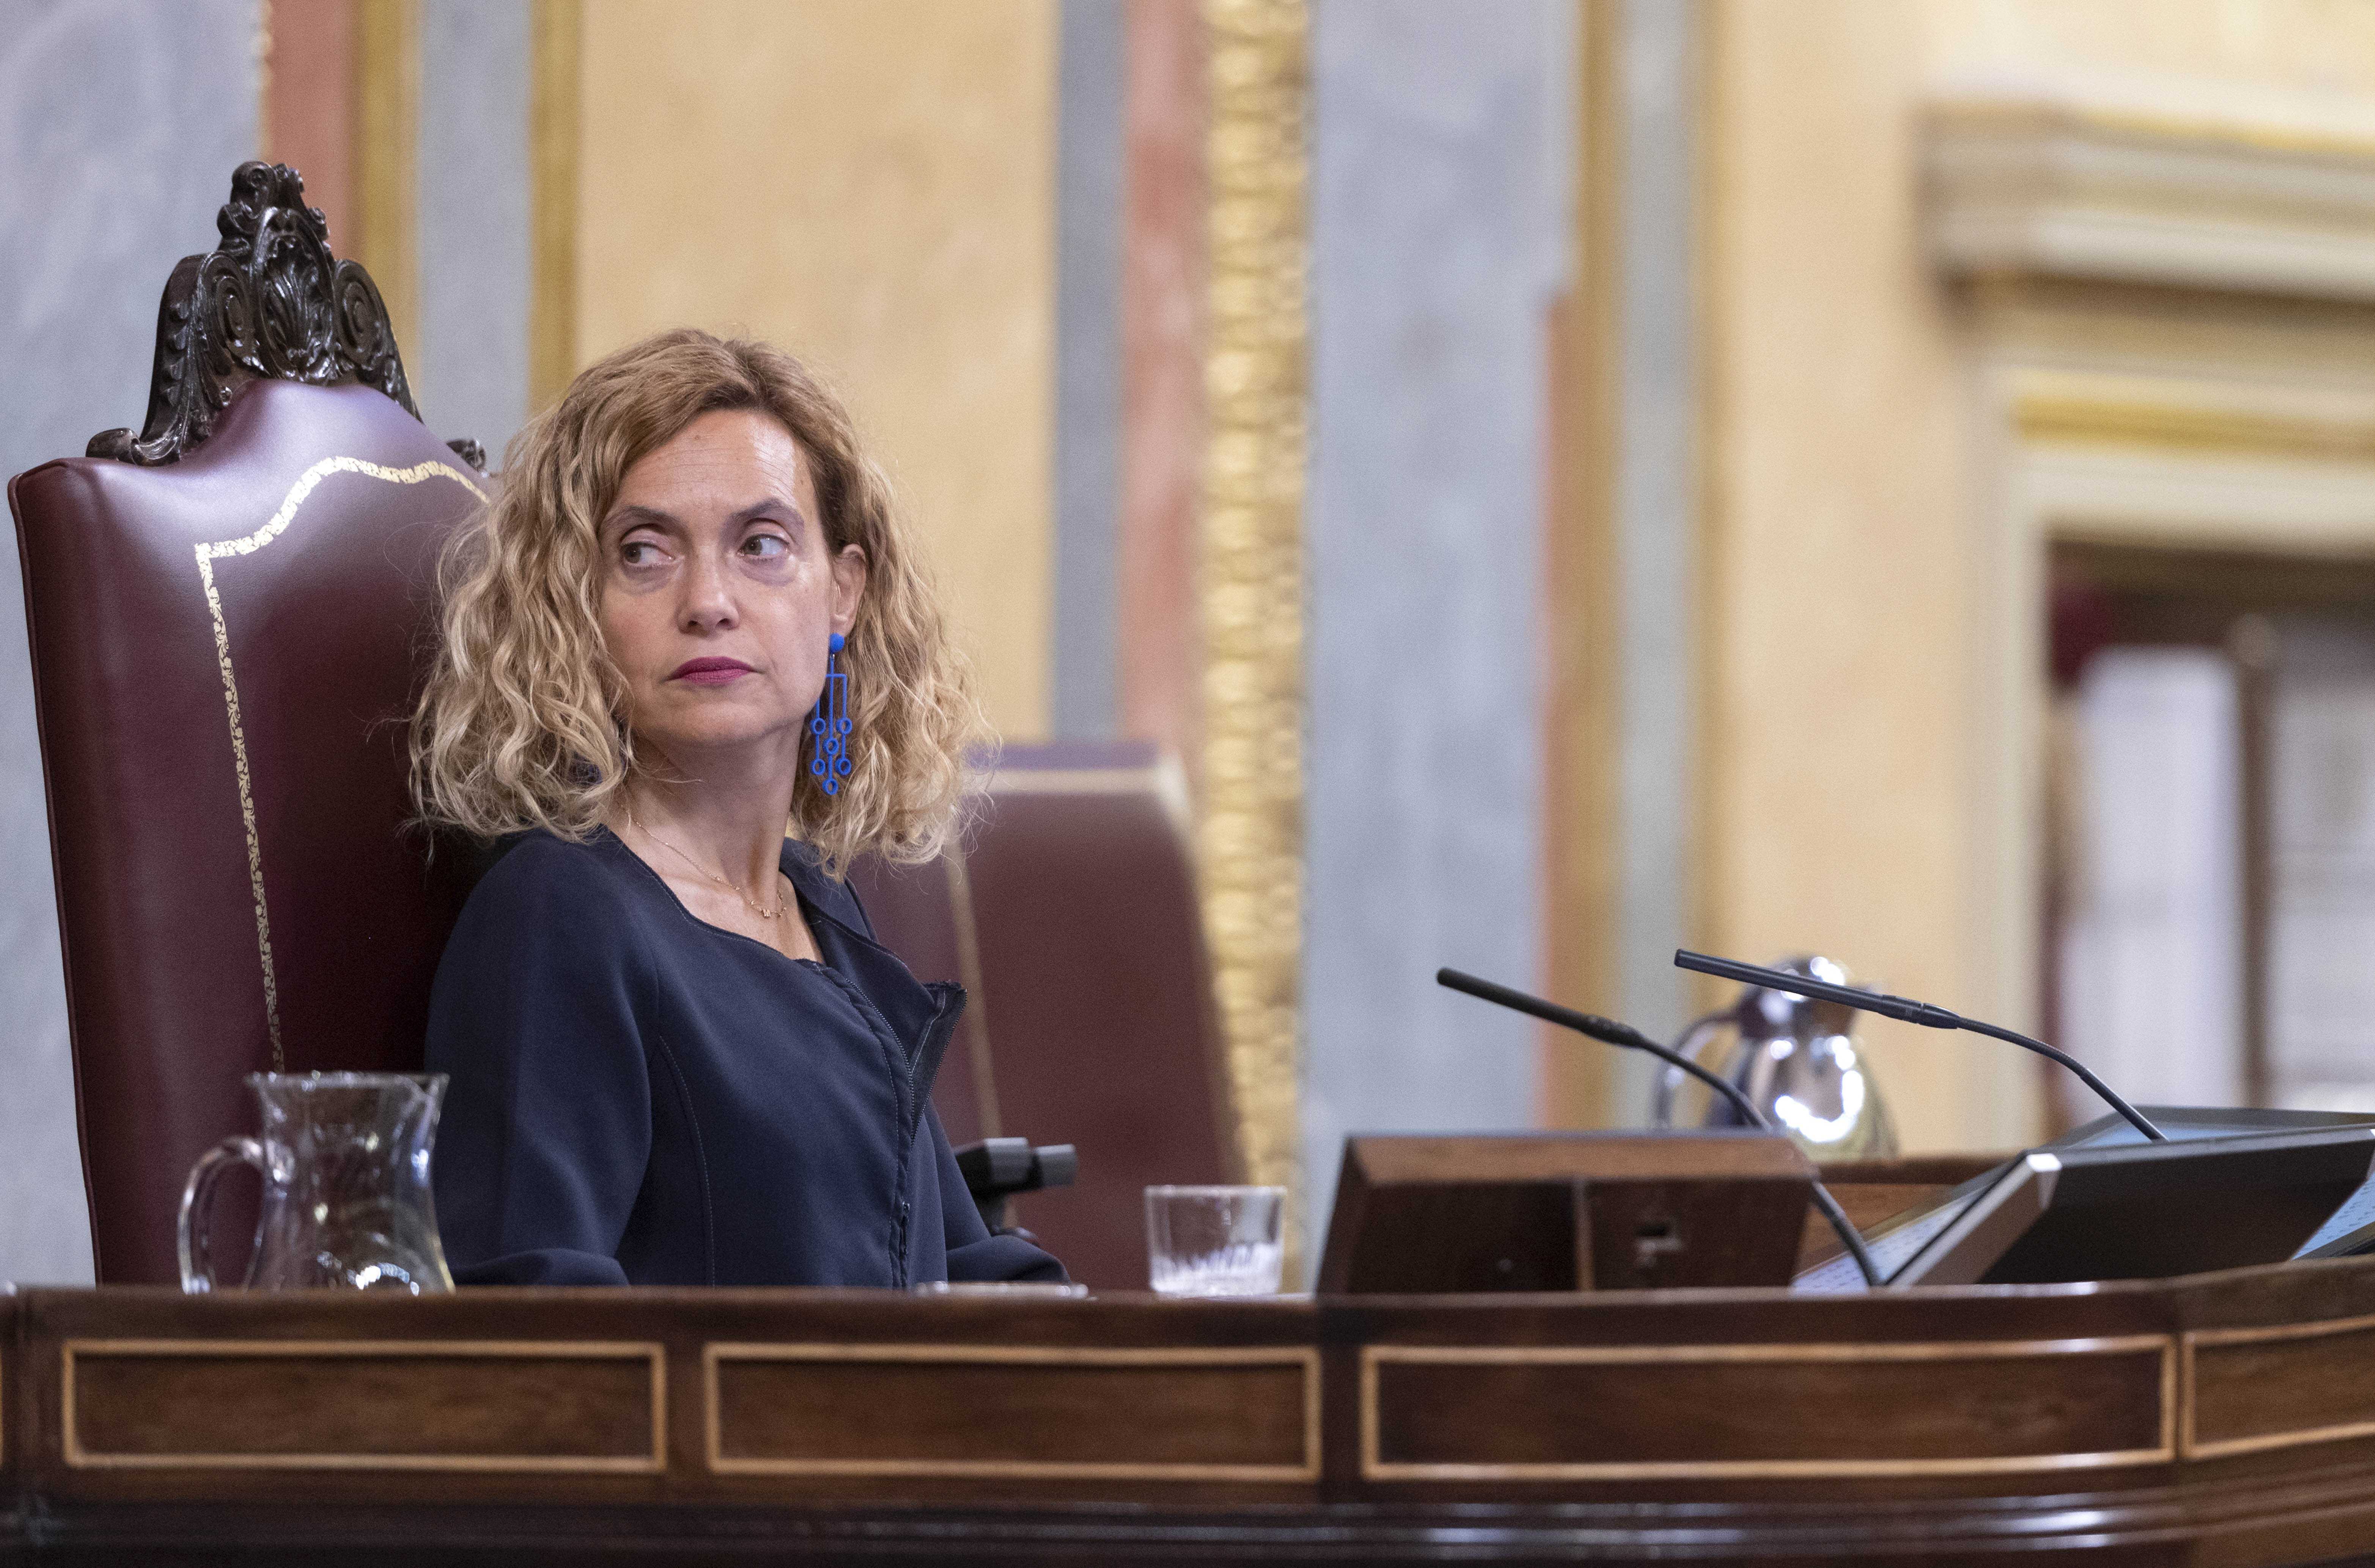 Meritxell Batet, ex-speaker of Spanish Congress, leaves politics